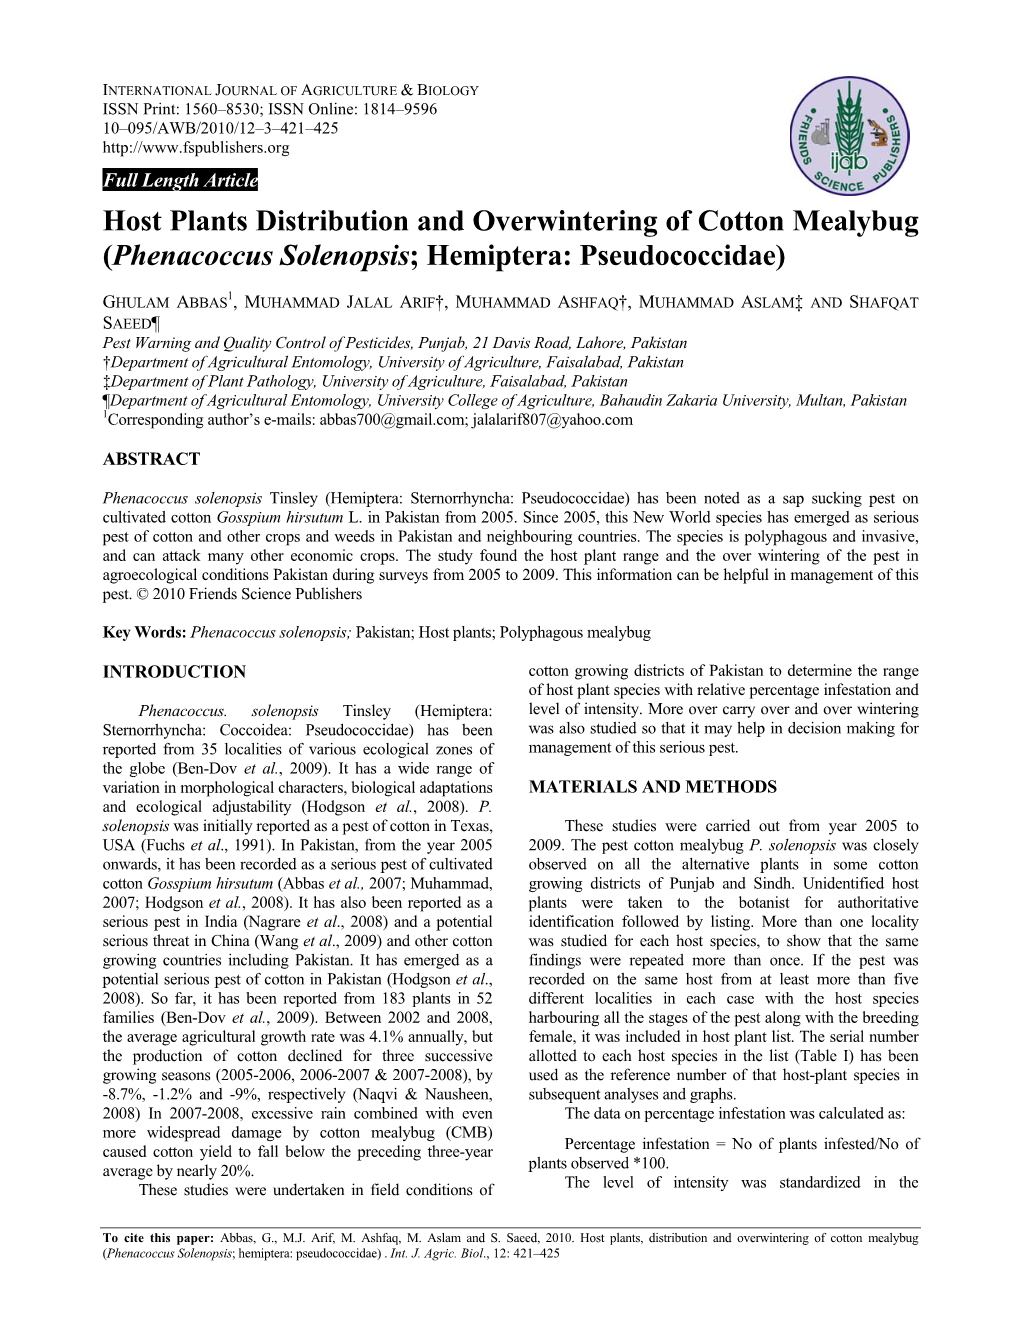 Host Plants Distribution and Overwintering of Cotton Mealybug (Phenacoccus Solenopsis; Hemiptera: Pseudococcidae)